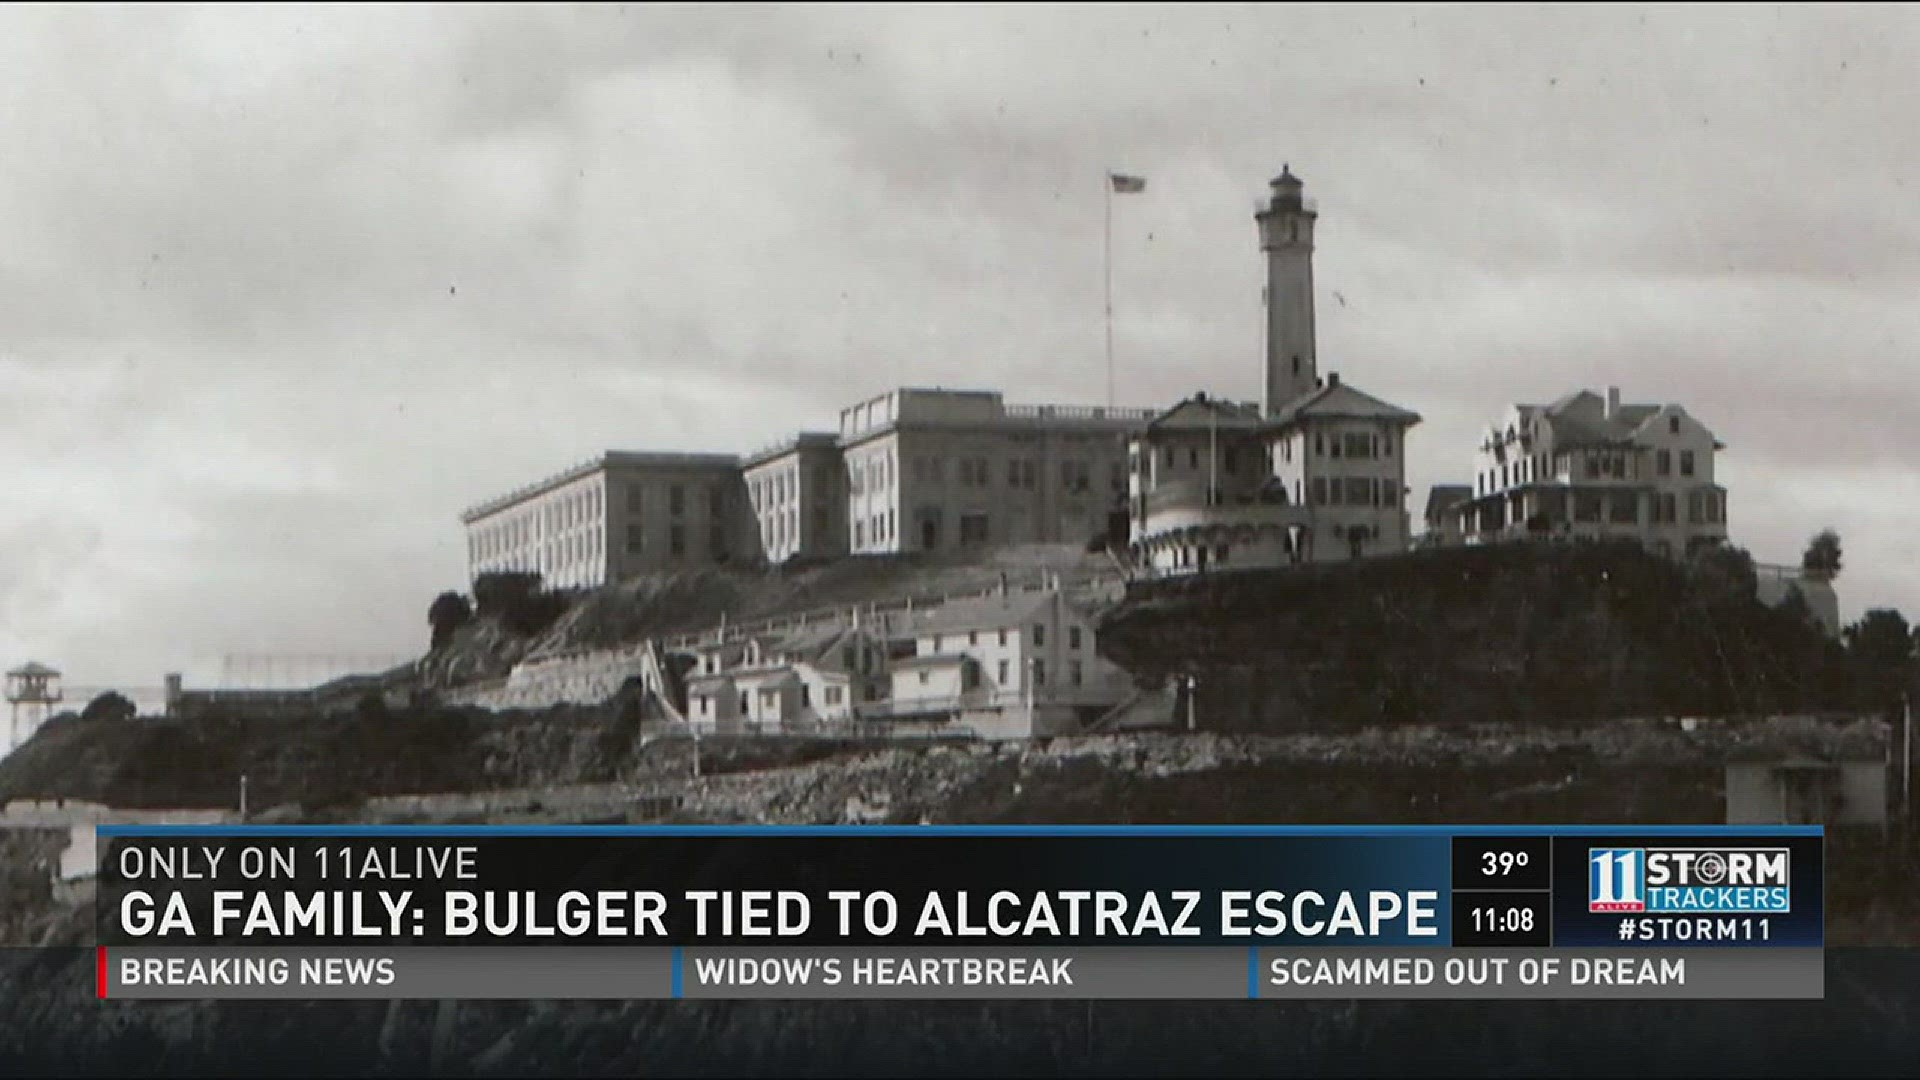 Exclusive: Ga. family claims Bulger tied to Alcatraz escape